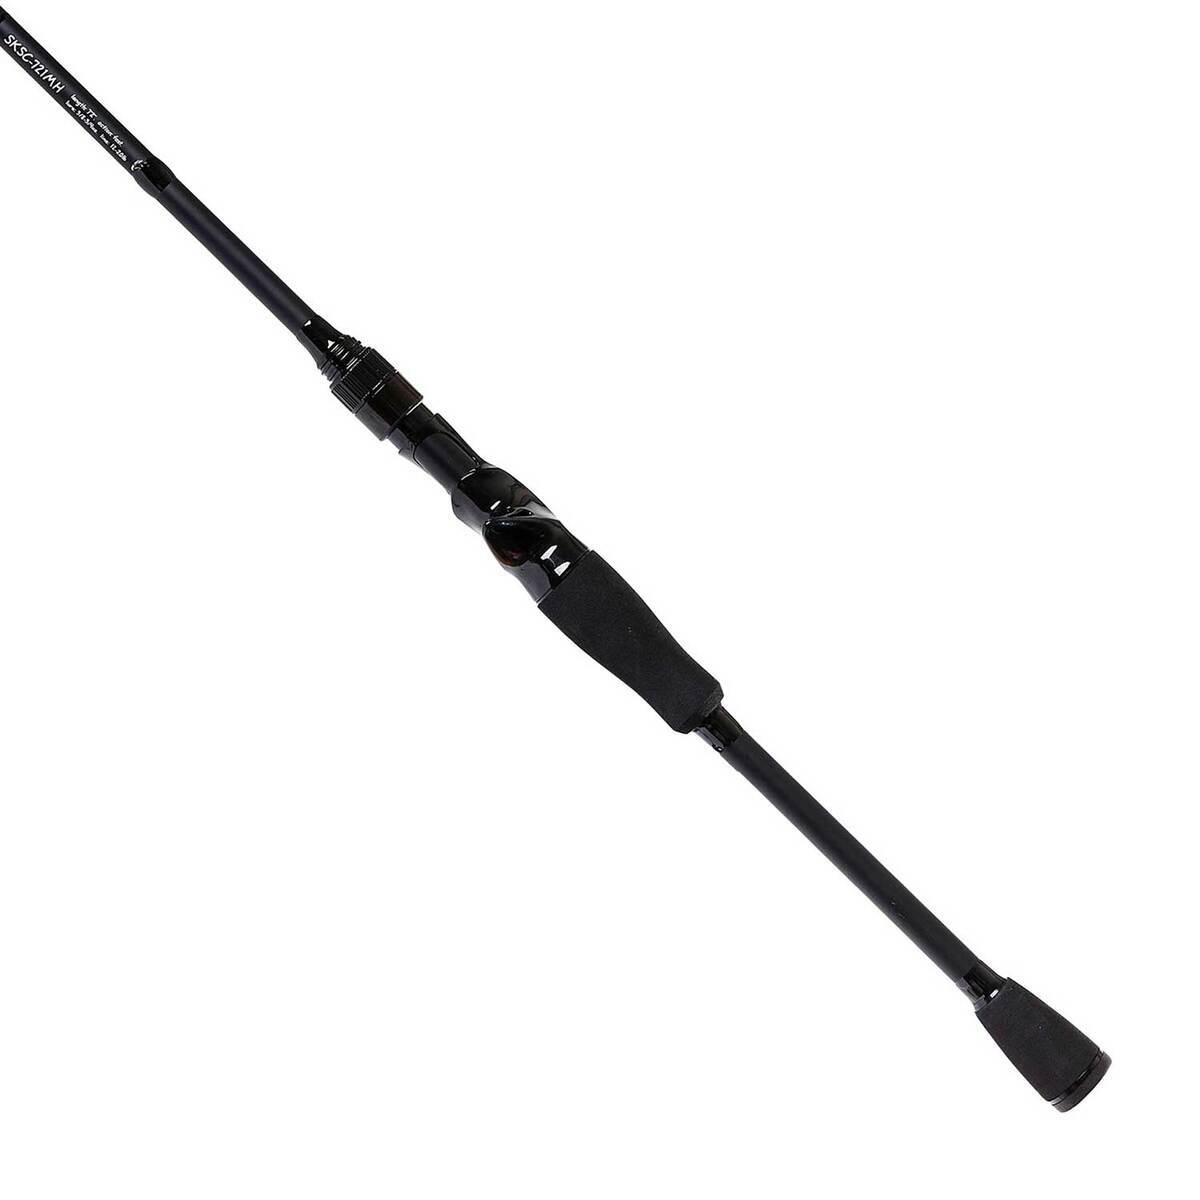 Favorite Fishing Sick Stick Casting Rod - 7ft 2in, Medium Heavy